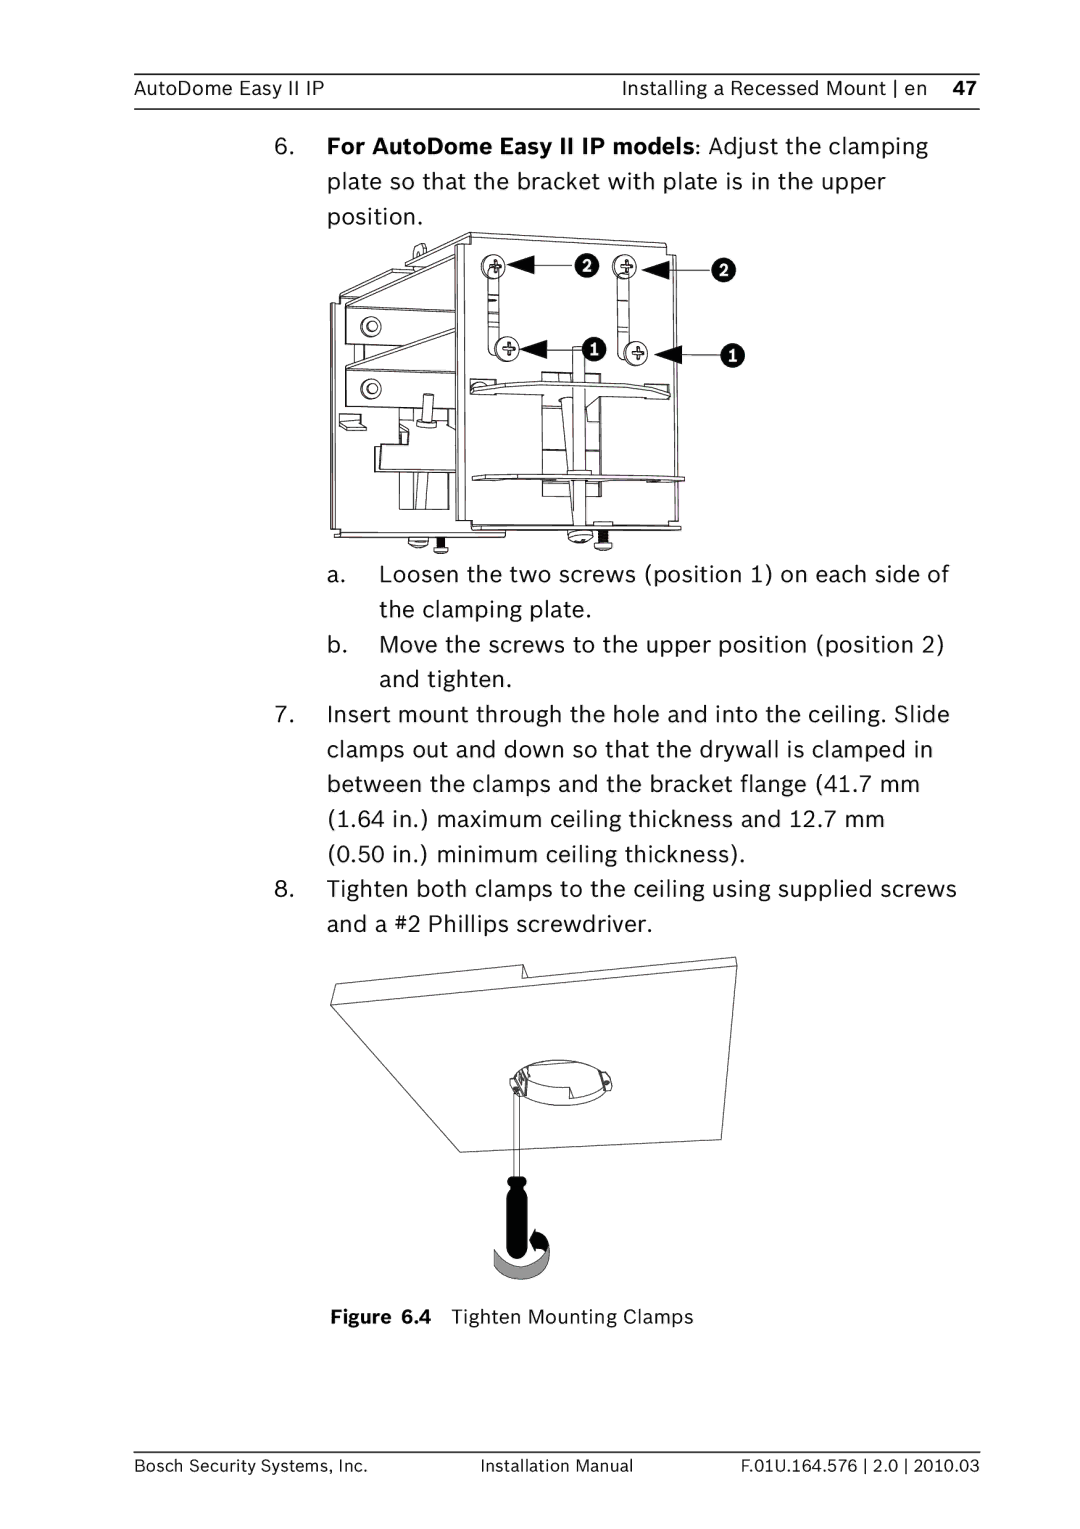 Bosch Appliances VEZ installation manual Tighten Mounting Clamps 